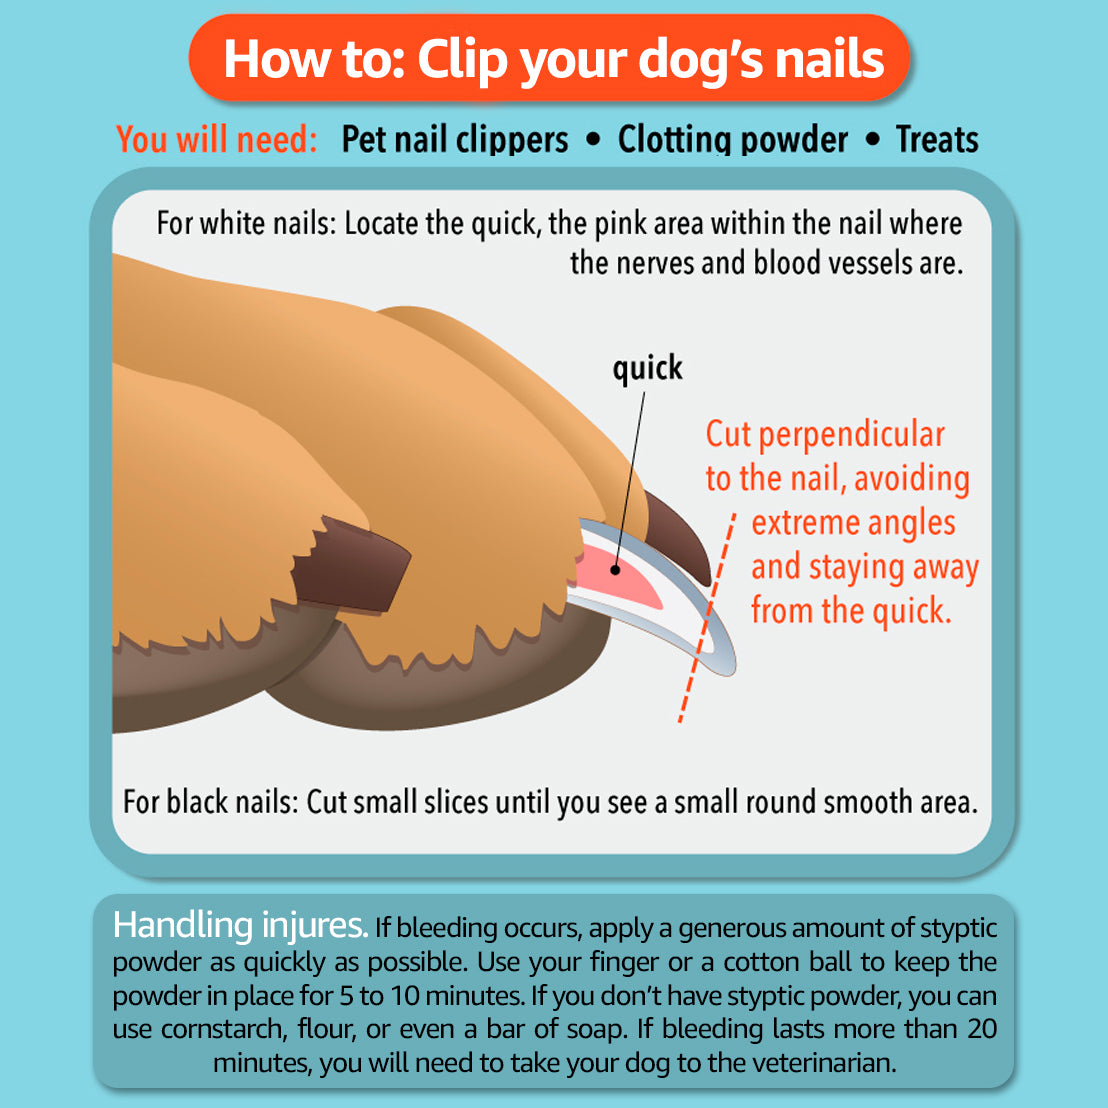 clip dog nails instruction